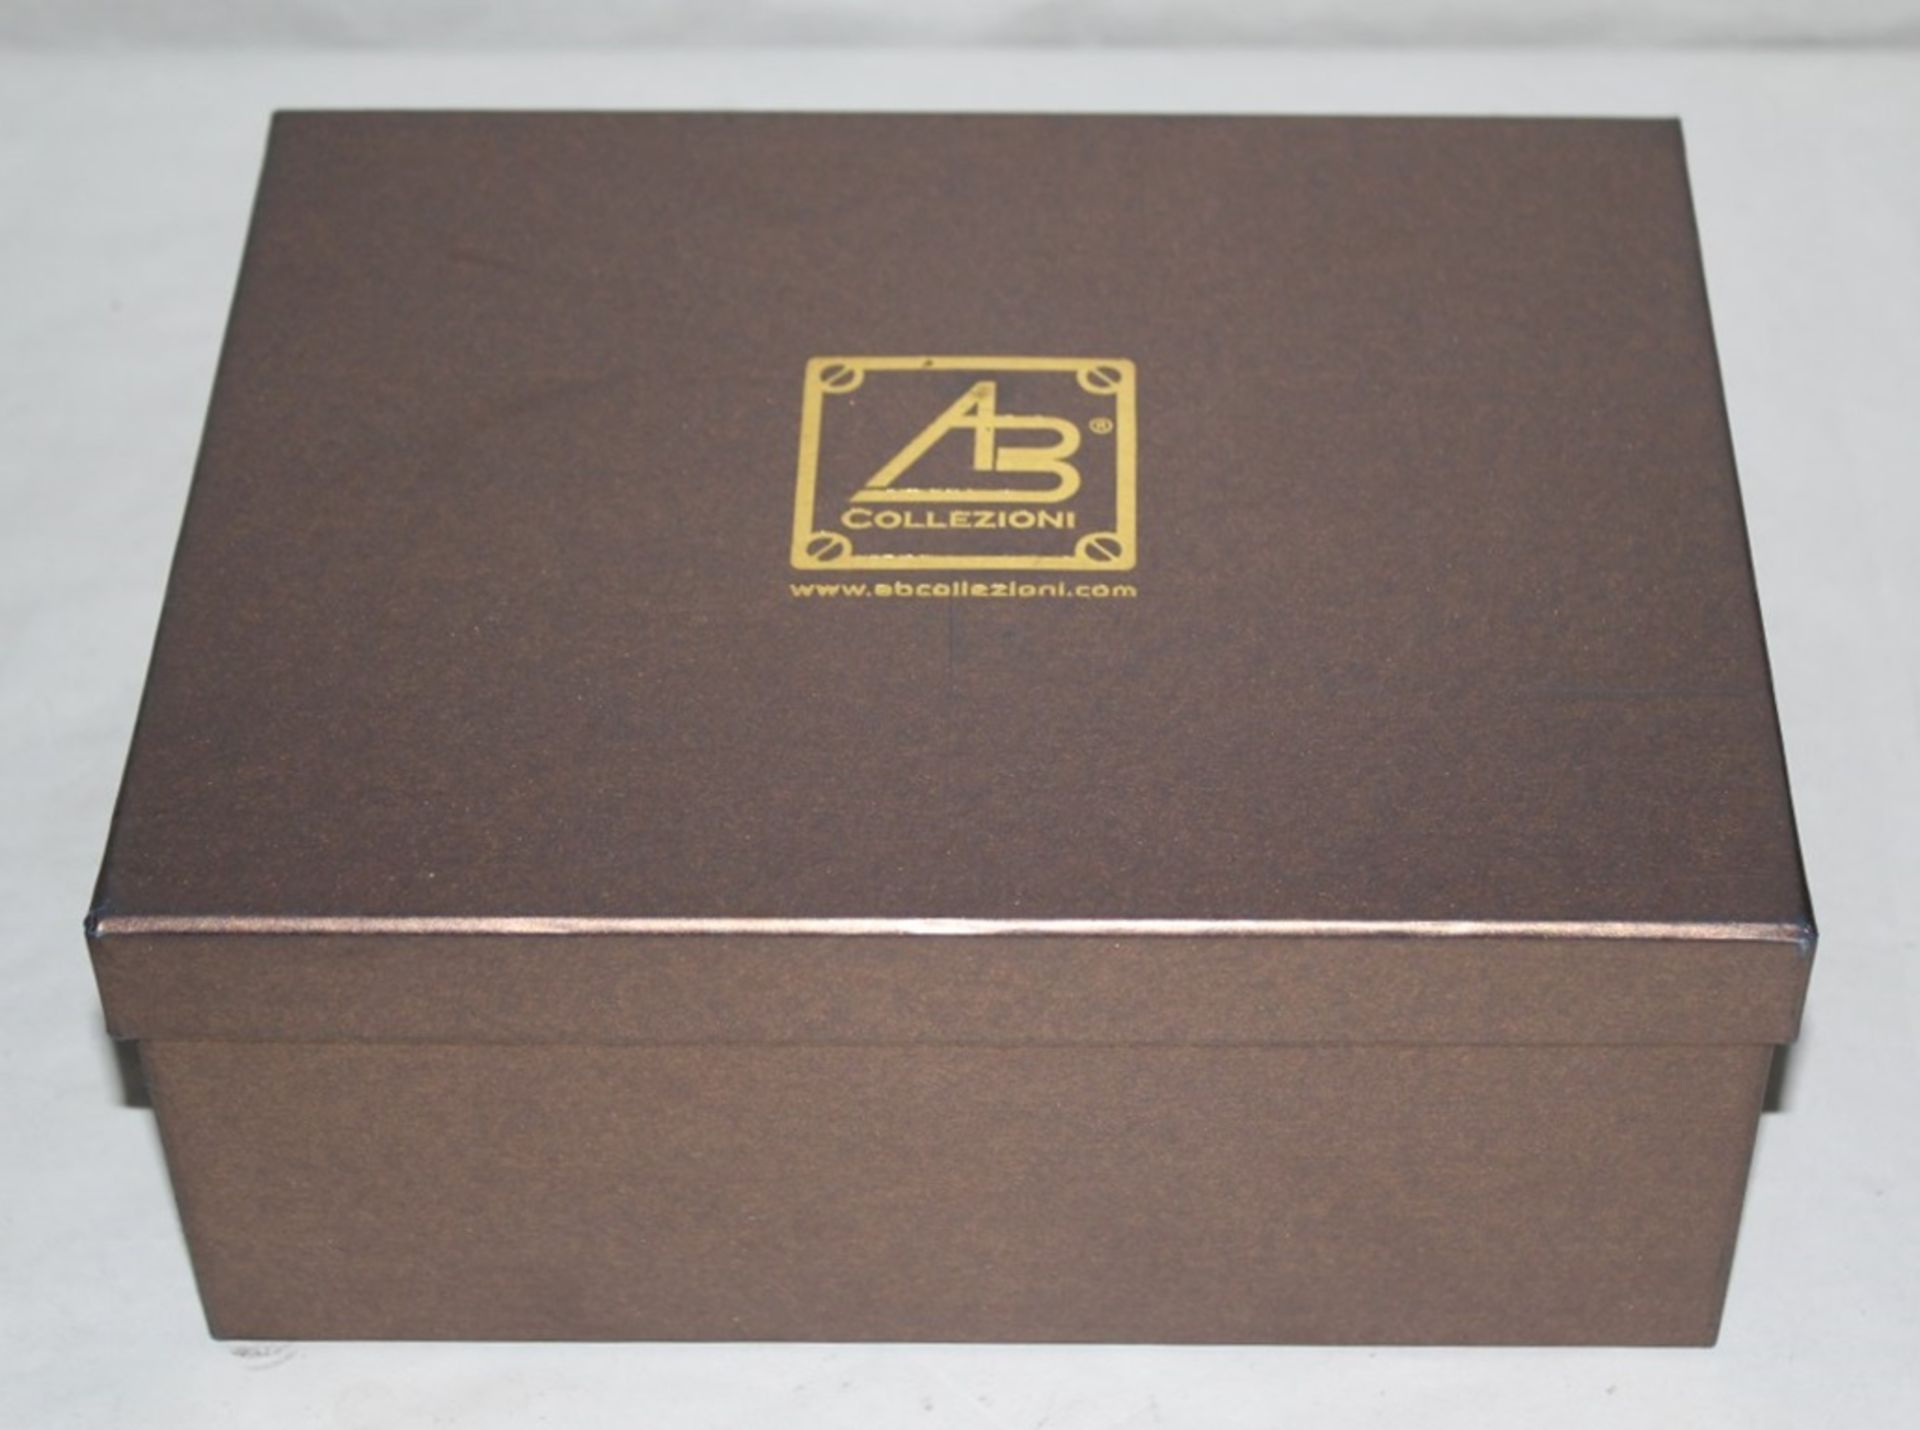 1 x "AB Collezioni" Italian Luxury Watch Box (34043) - Ref LT149 – Genuine Leather With 6 - Image 3 of 4